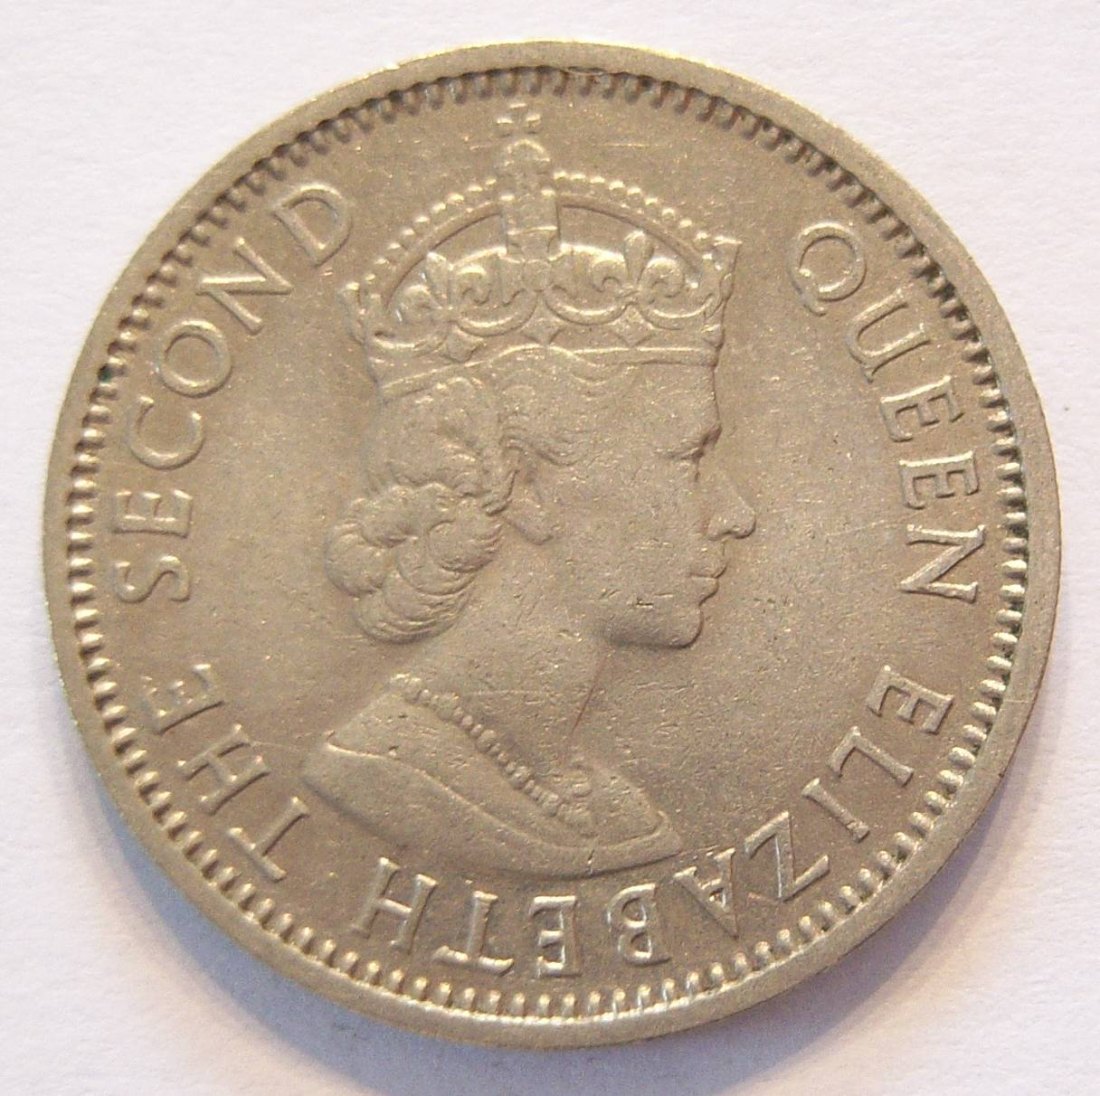  Nigeria 1 One Shilling 1962   